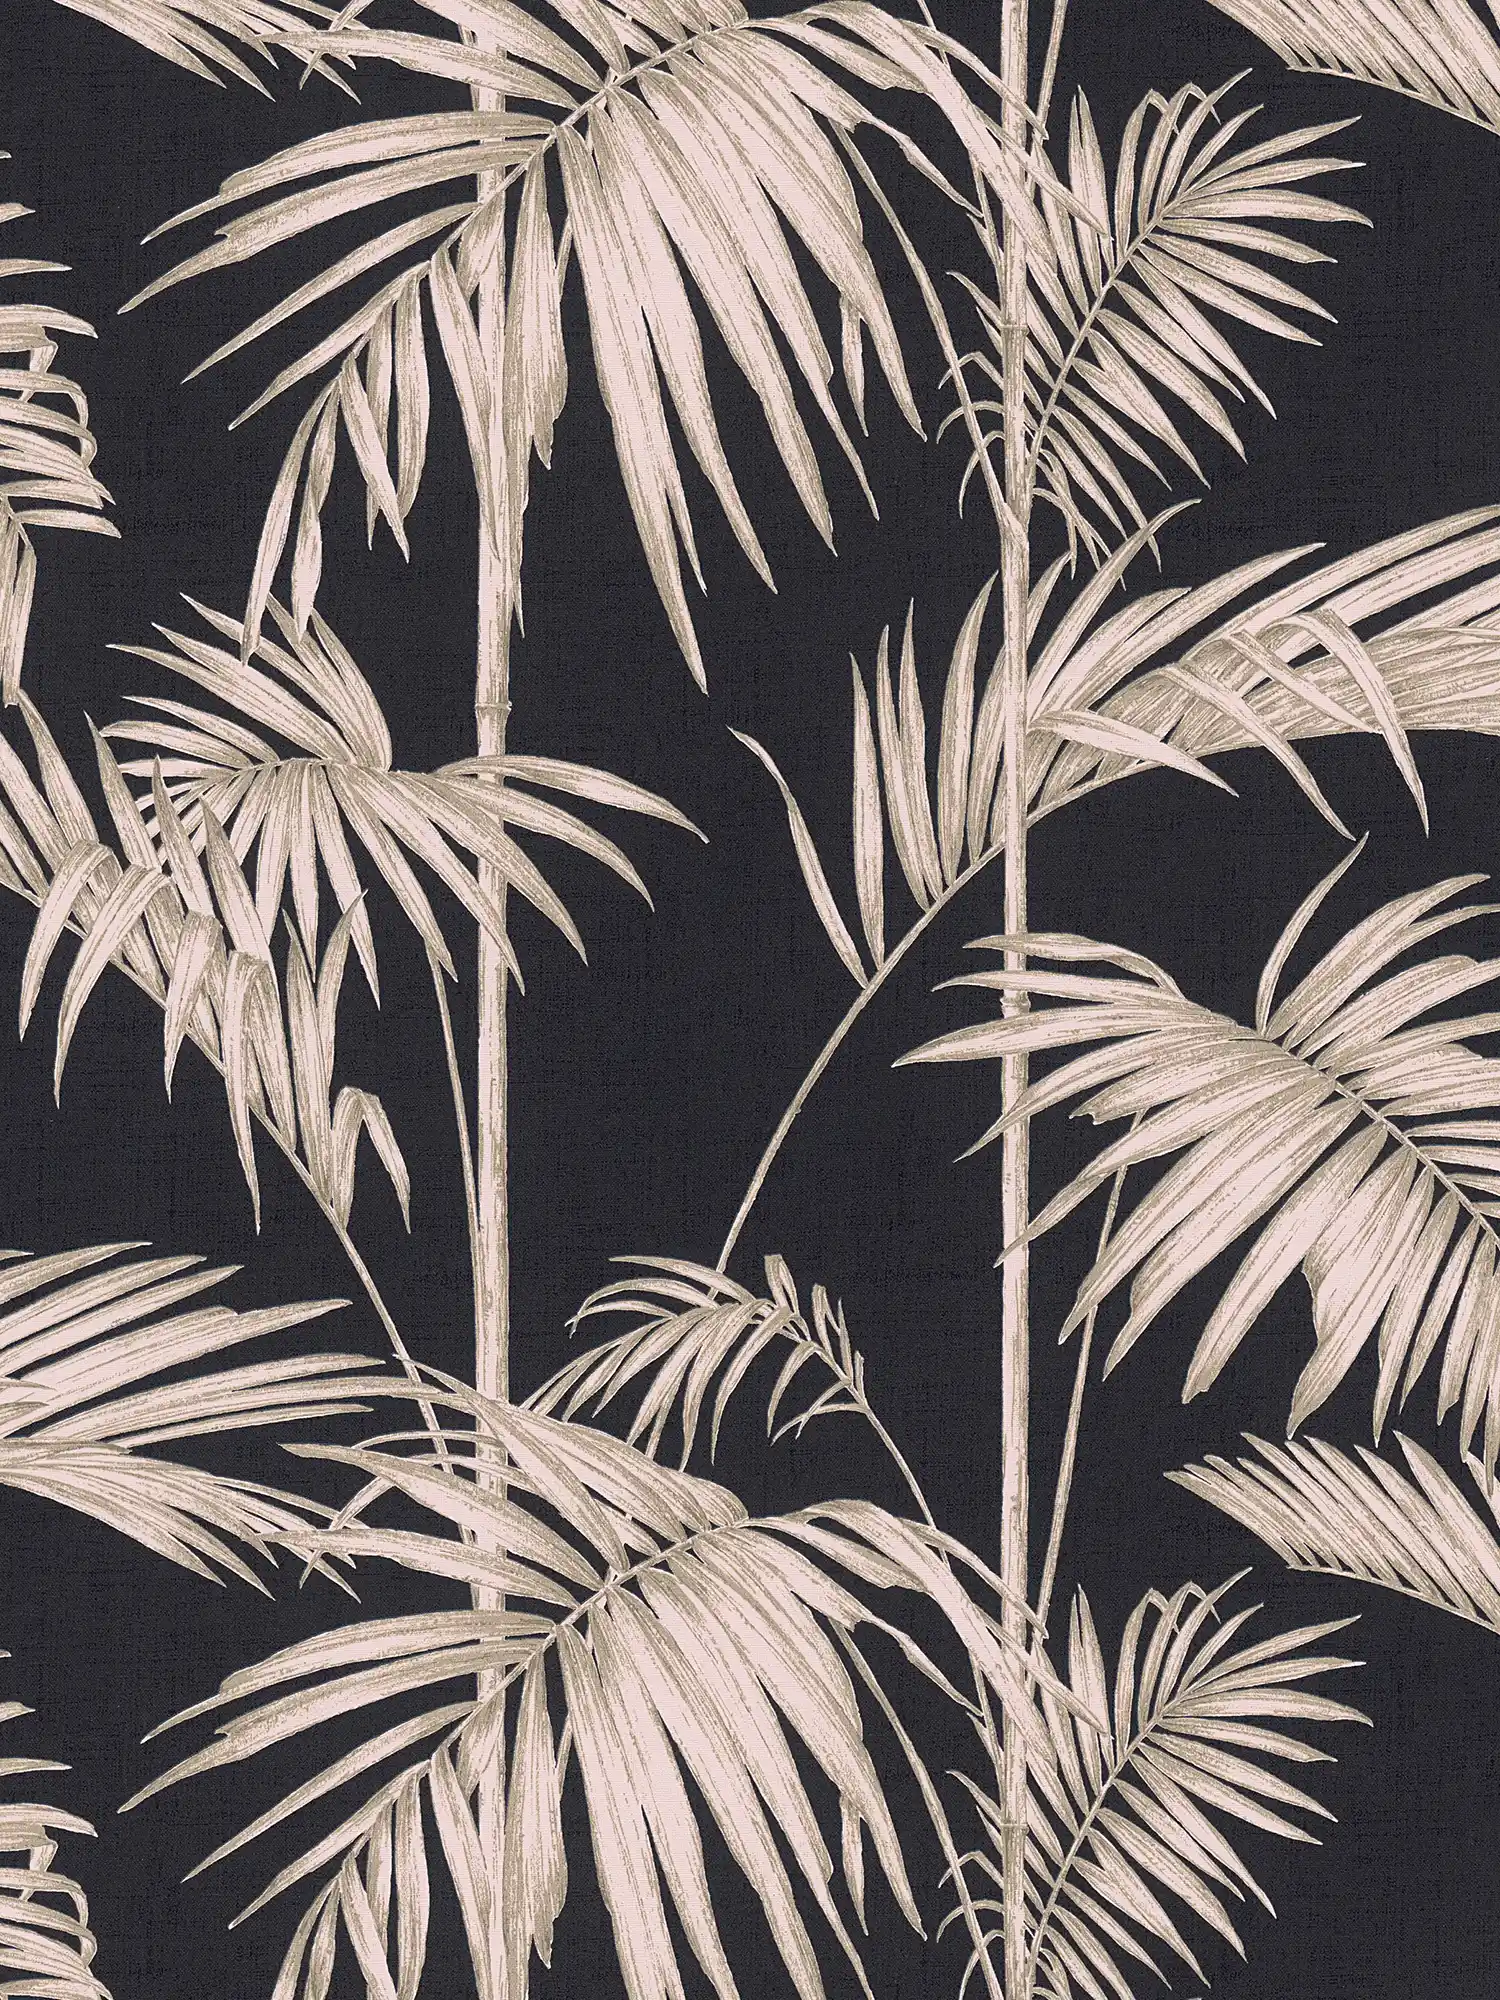 Papel pintado natural Hojas de palmera, Bambú - Rosa, Bronce, Negro
